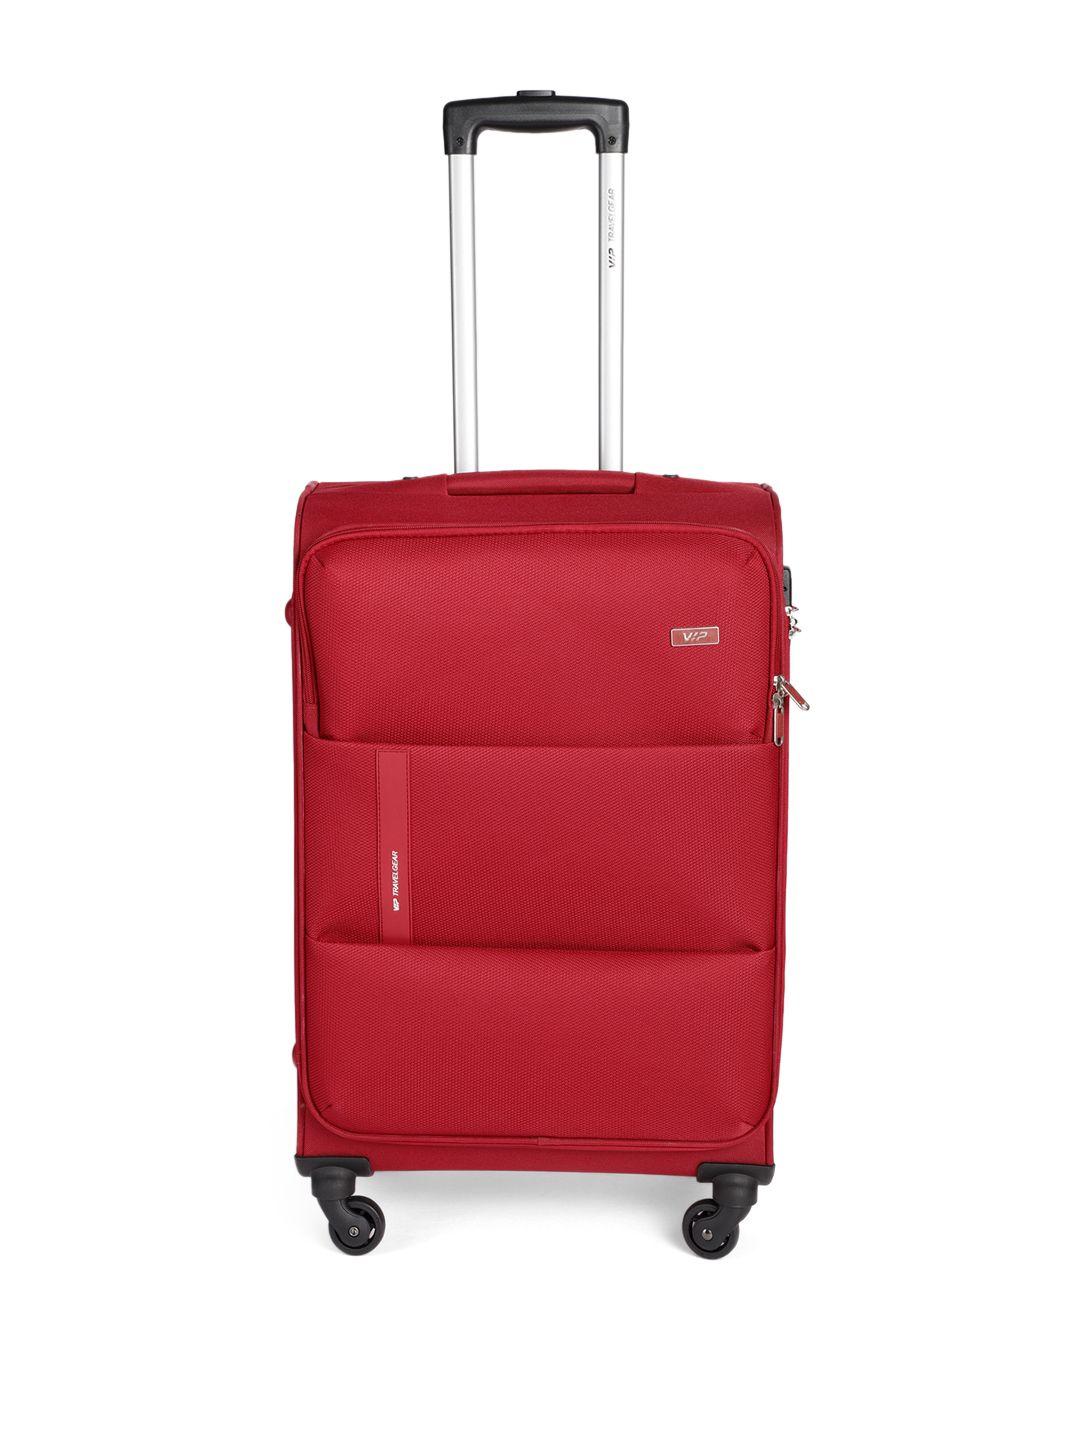 vip-widget-solid-medium-360-degree-rotatable-trolley-suitcase